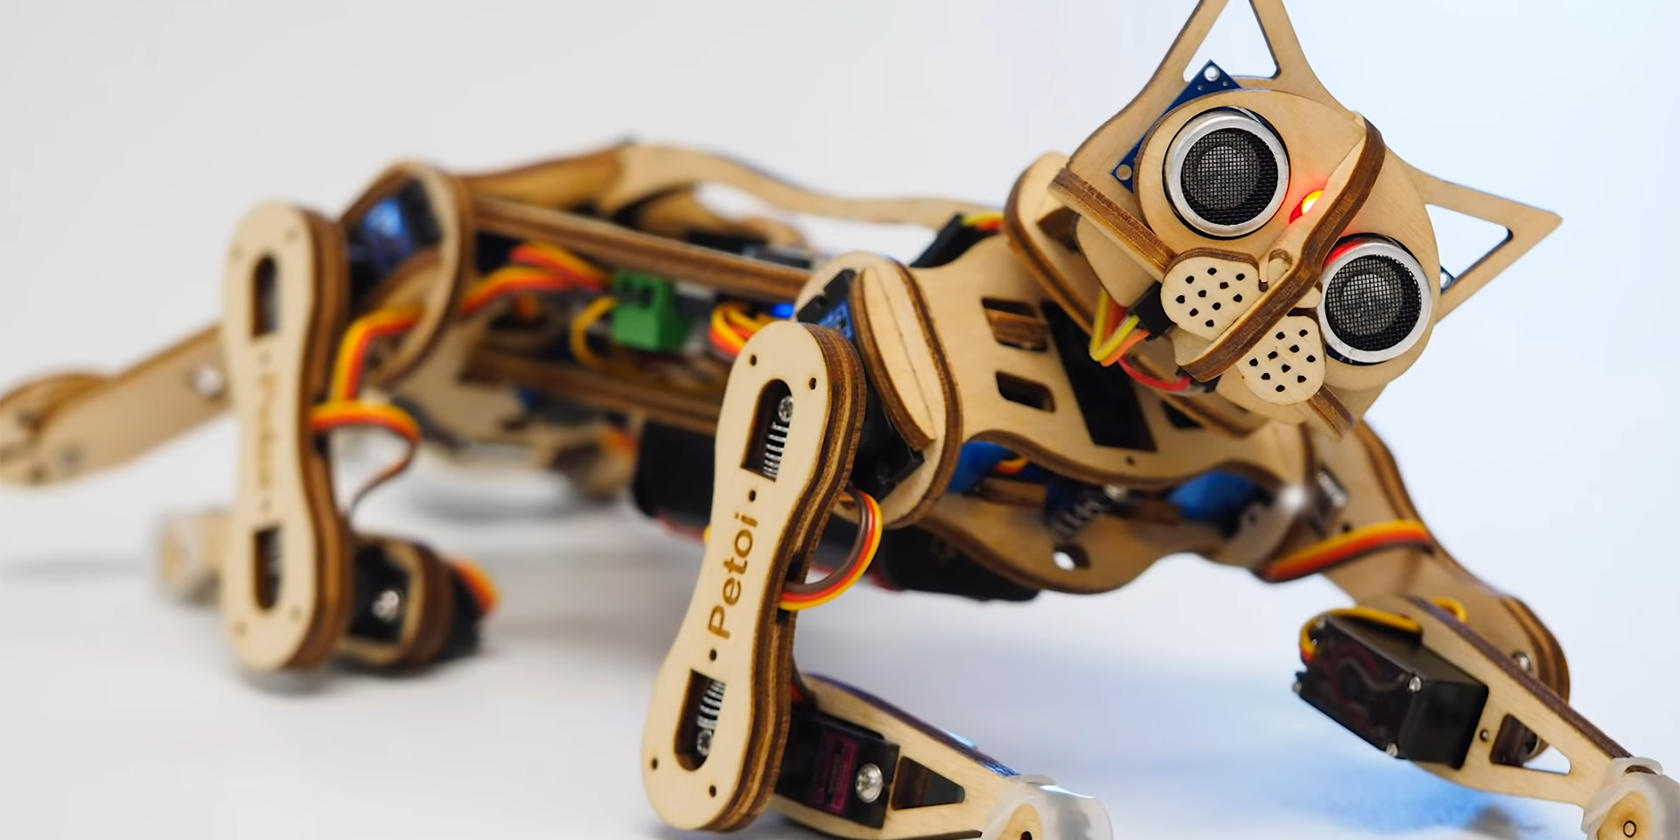 The 10 Best Raspberry Pi Robotics Projects